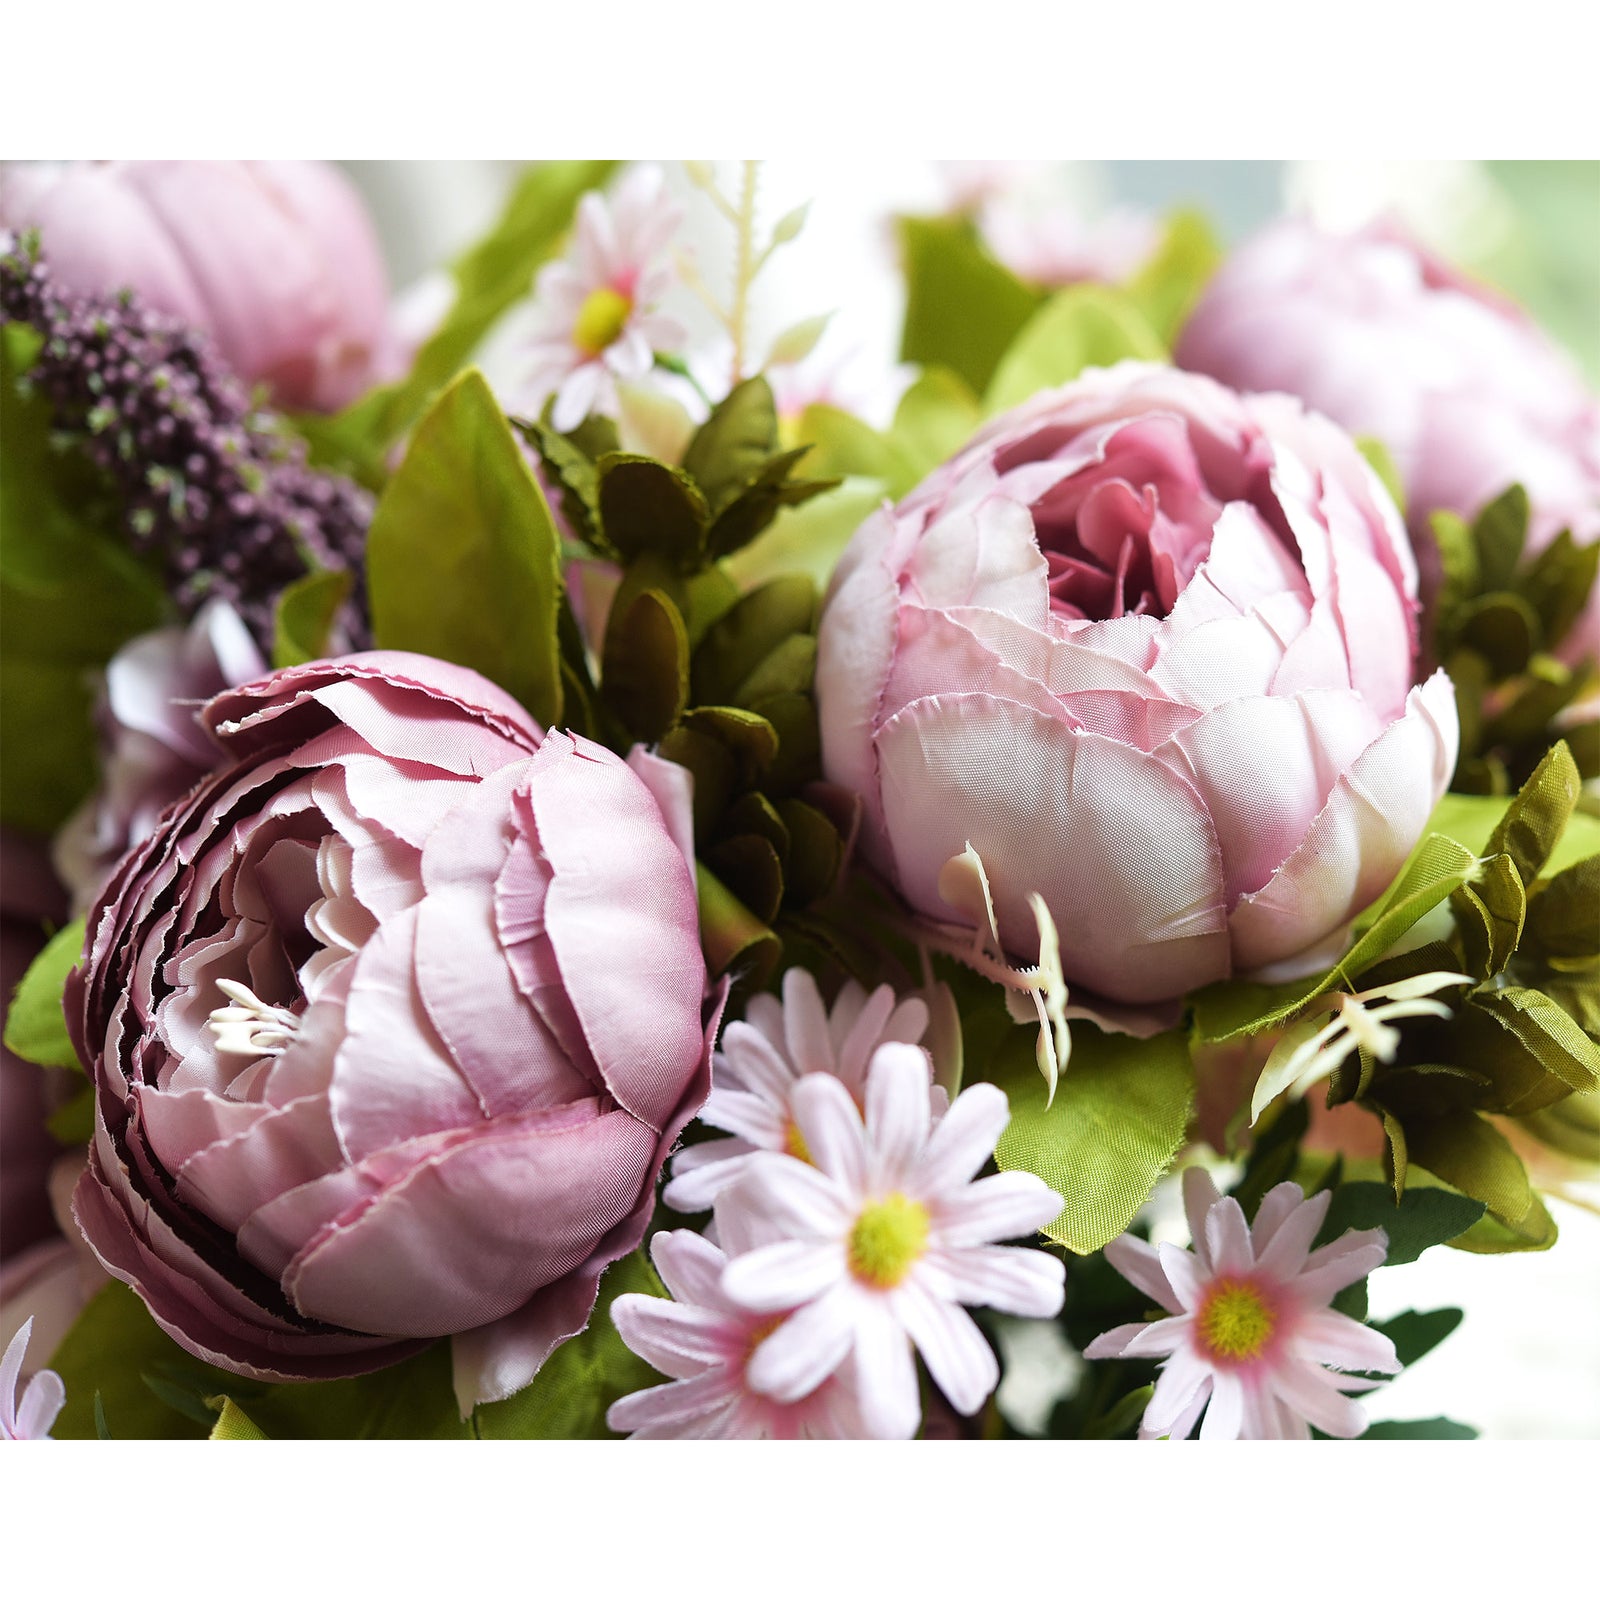 Buy romantic Peony, Hydrangea & Daisy silk flower arrangement at Petals.